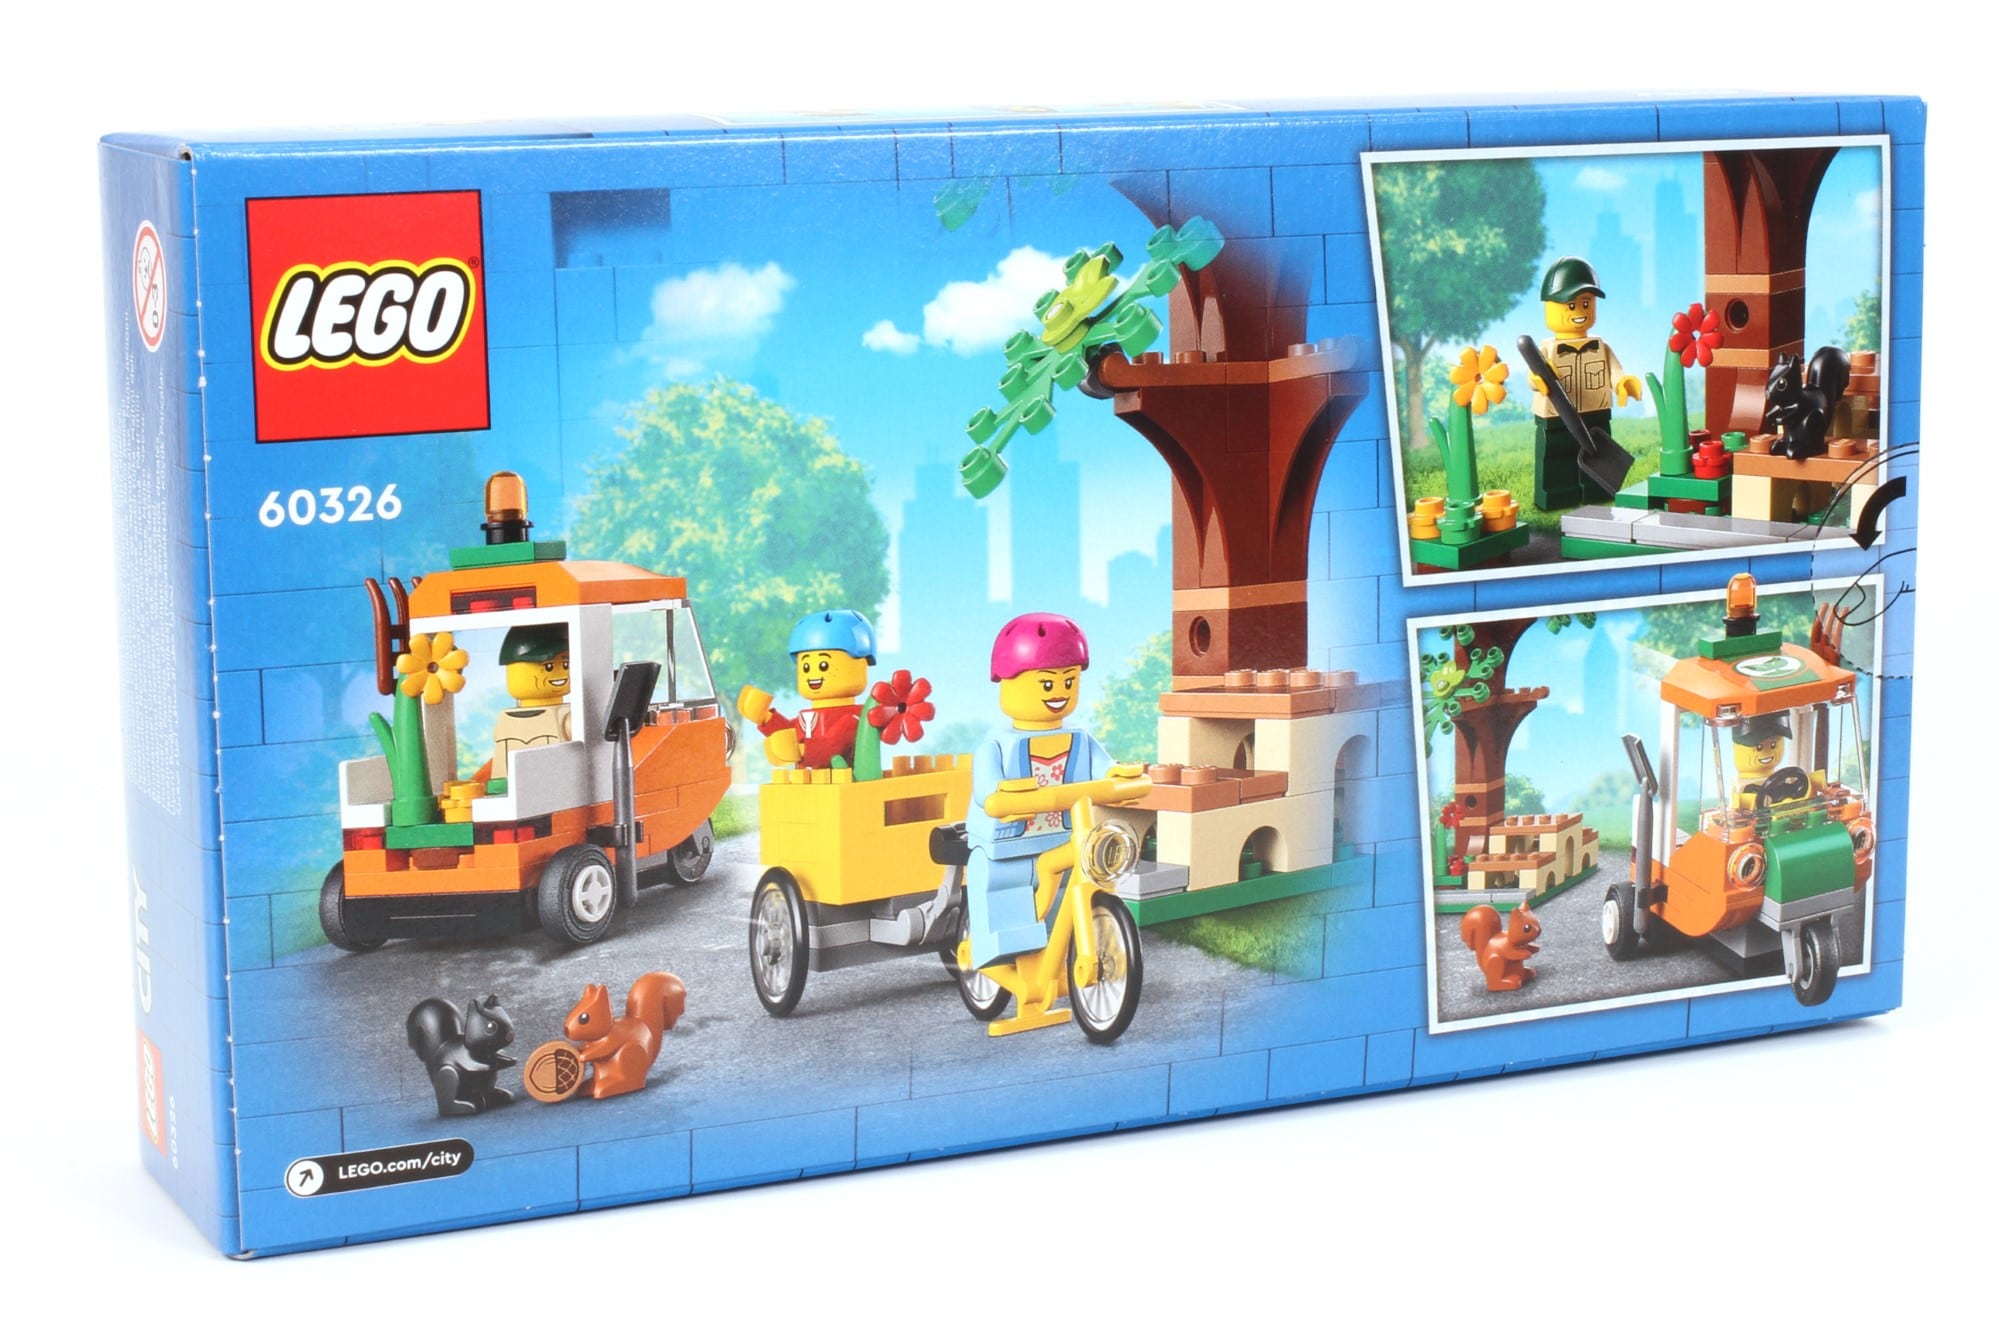 LEGO City 60326 Pciknick Im Park Review (2)